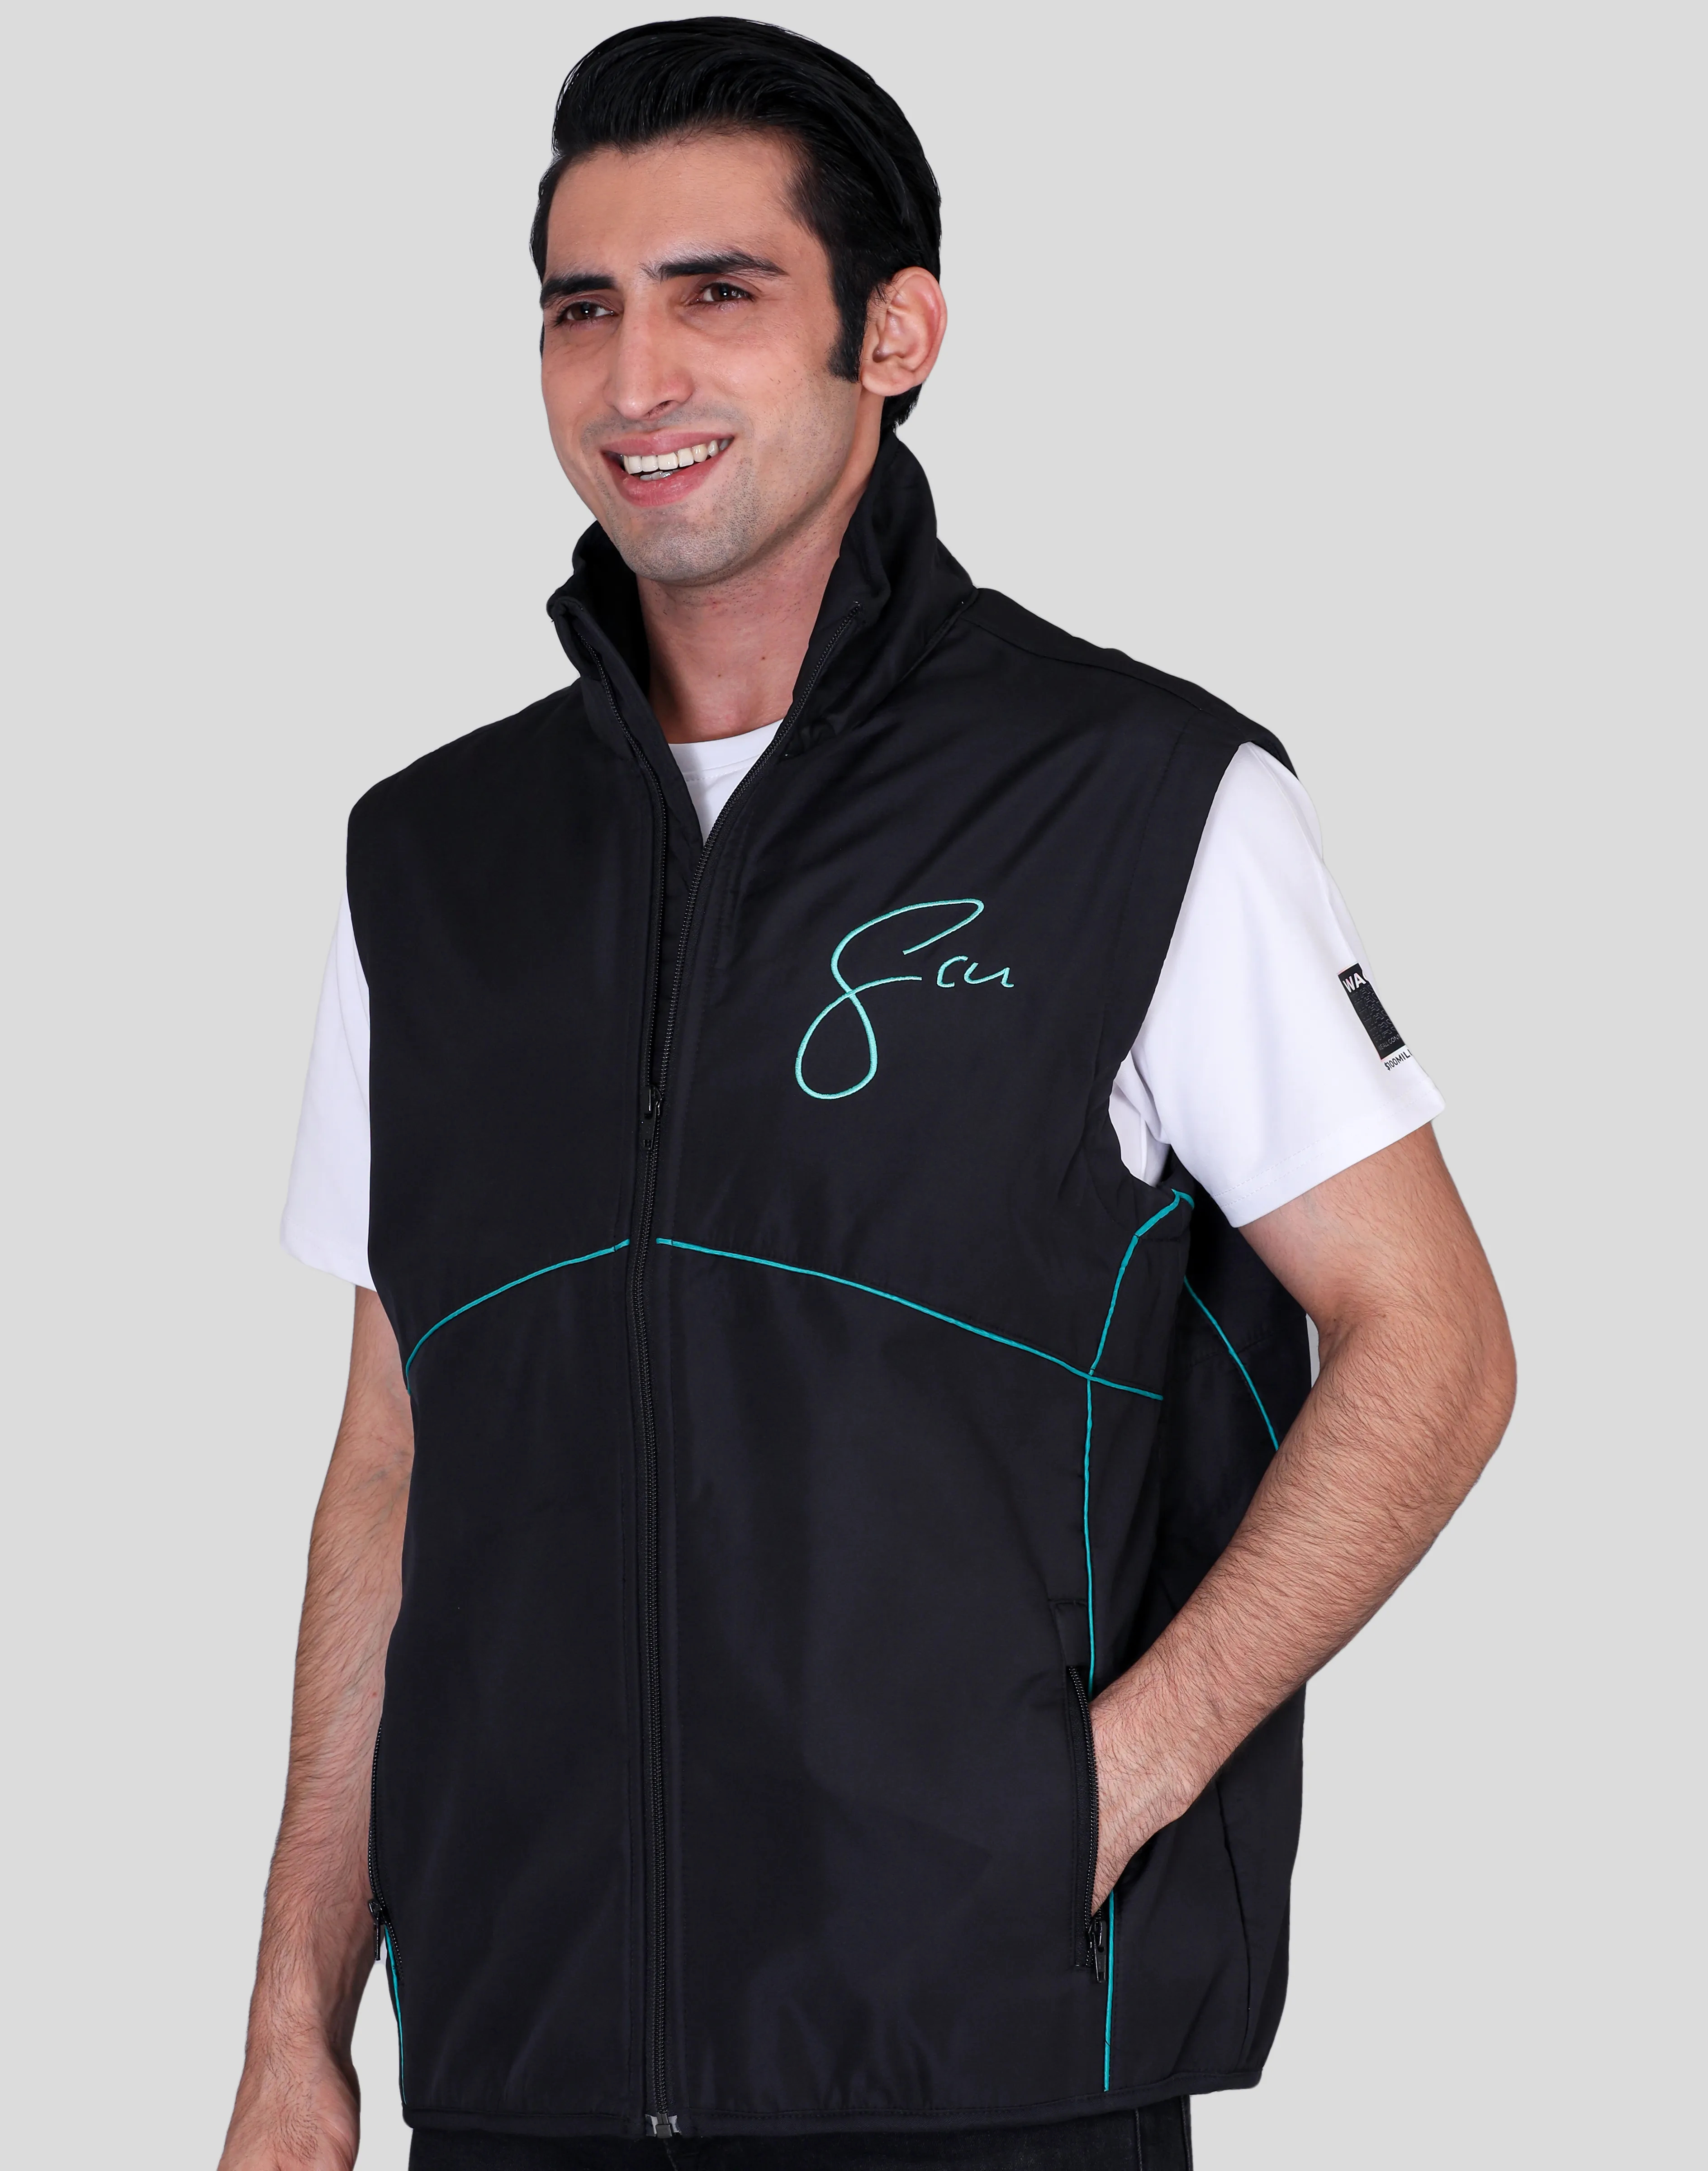 Manufacturer of embroidered custom jackets